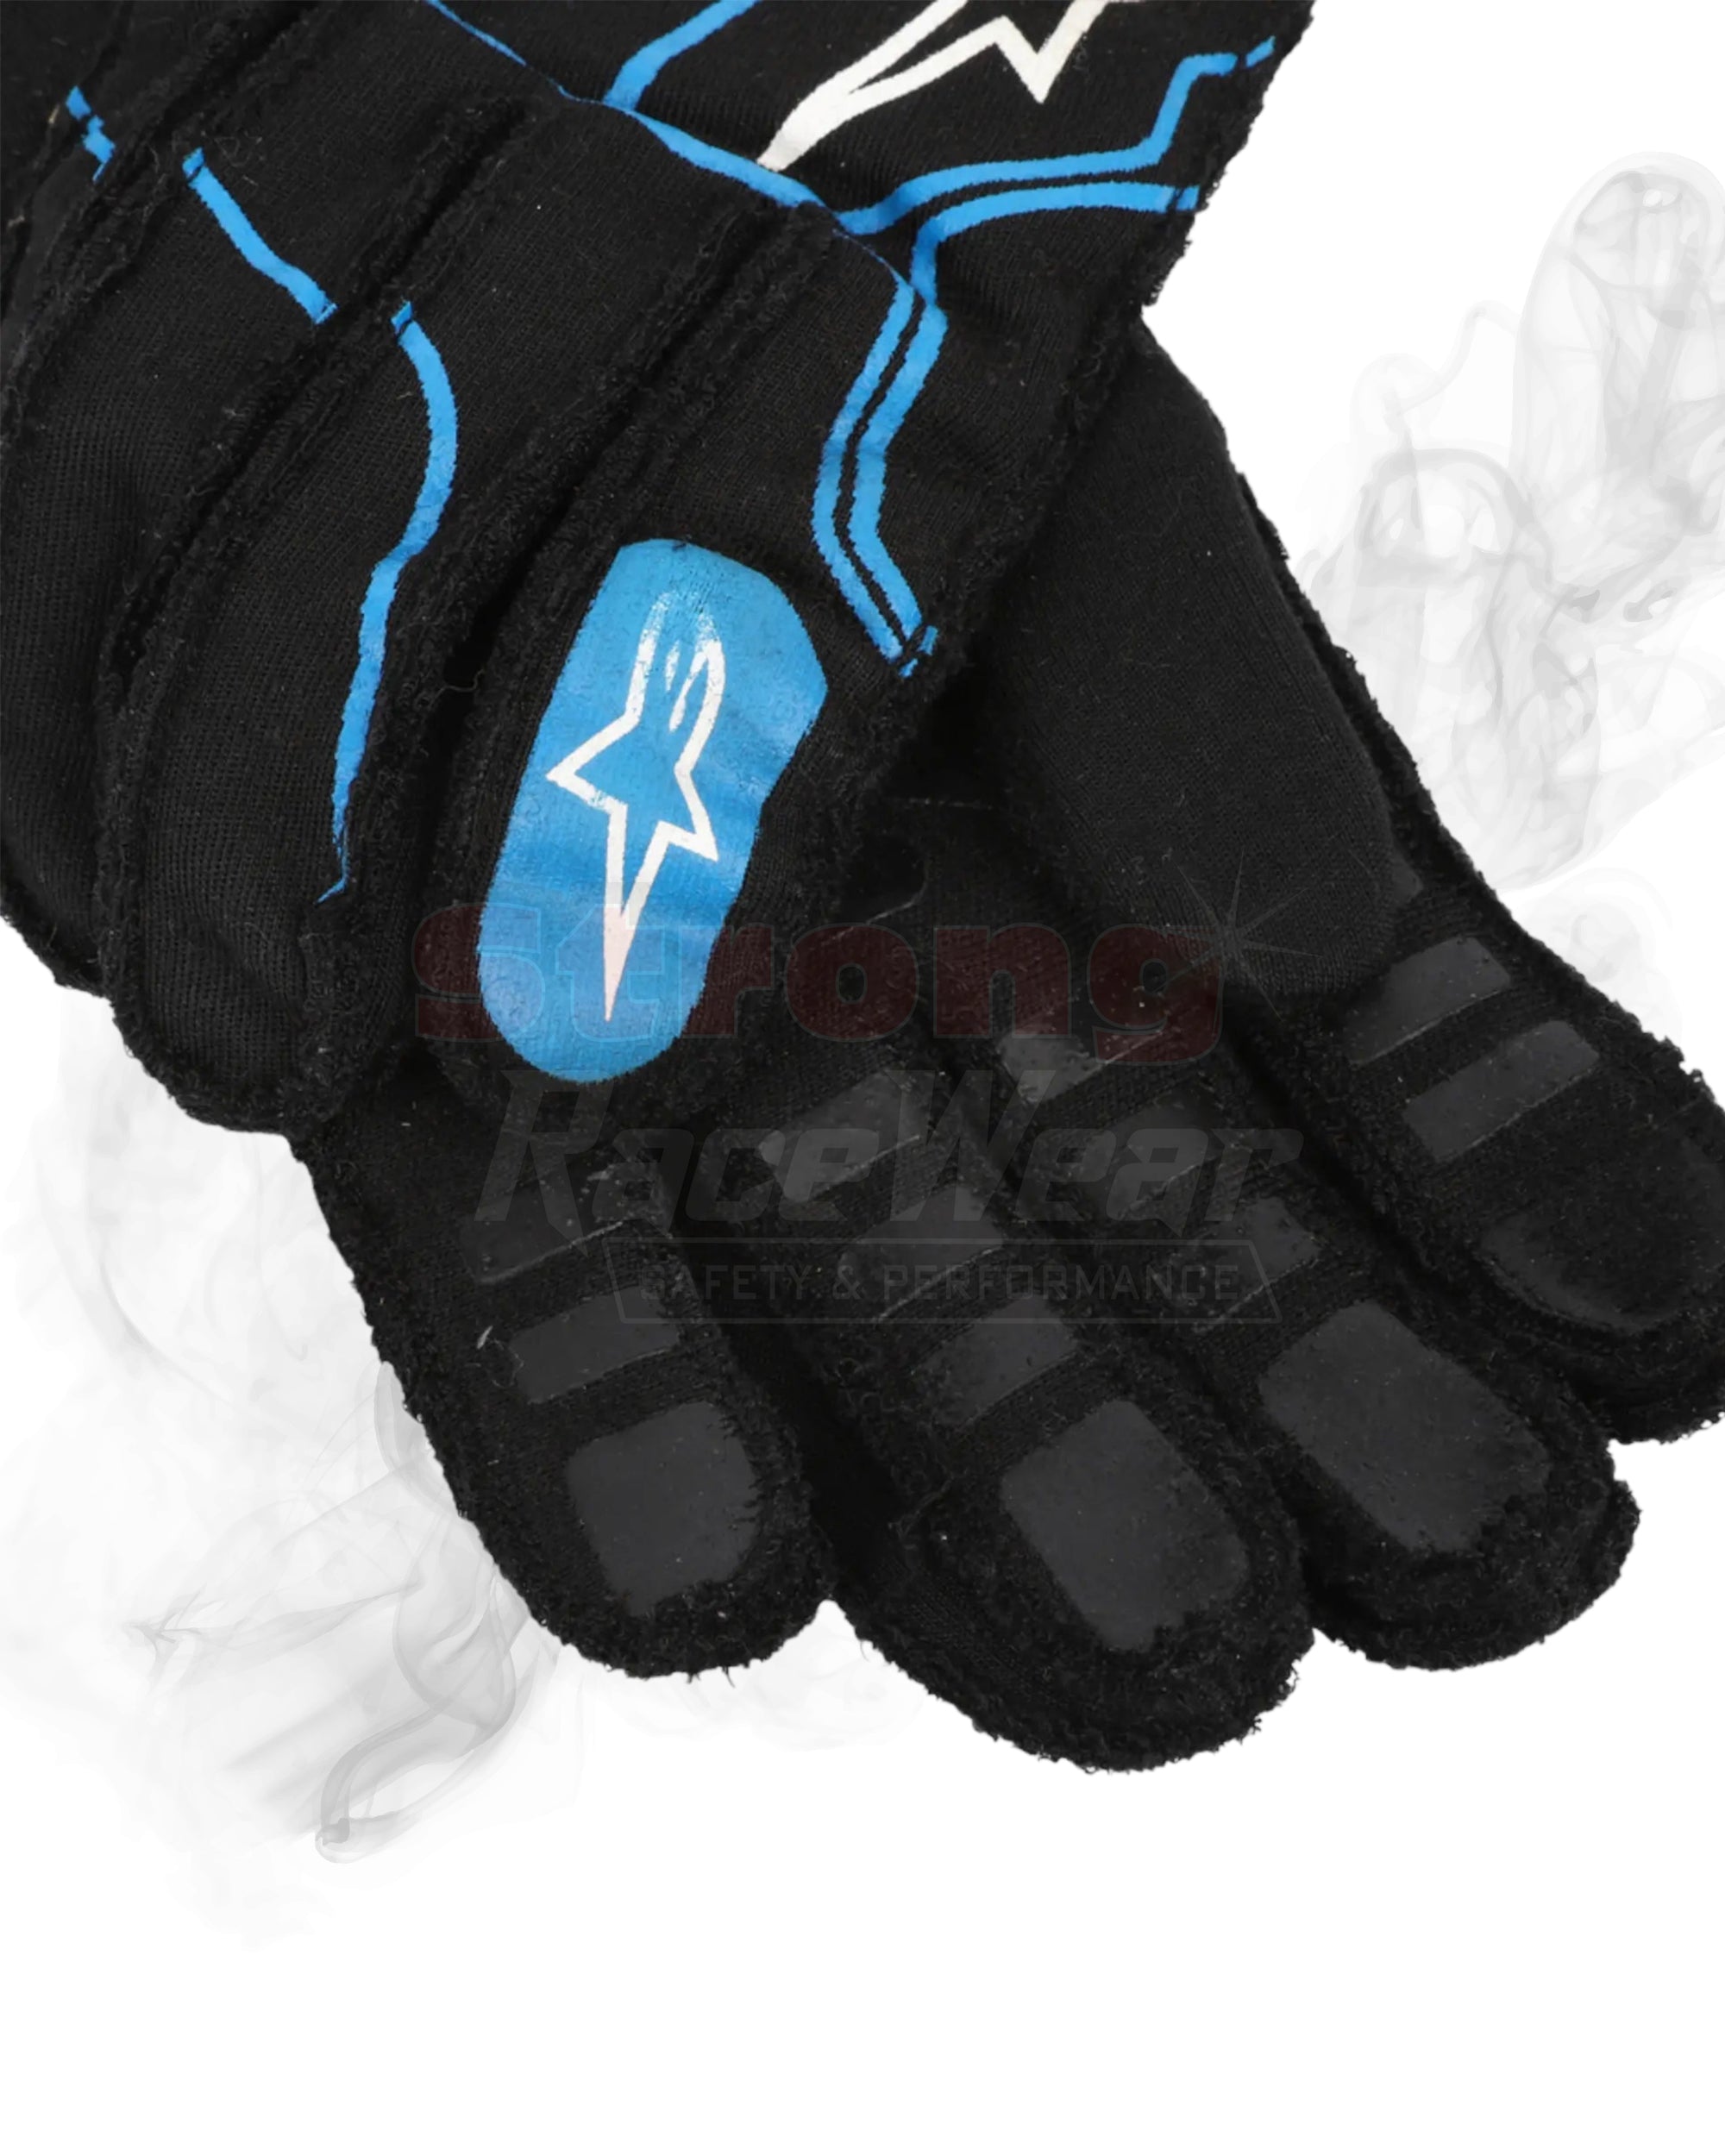 2021 Esteban Ocon Race Gloves